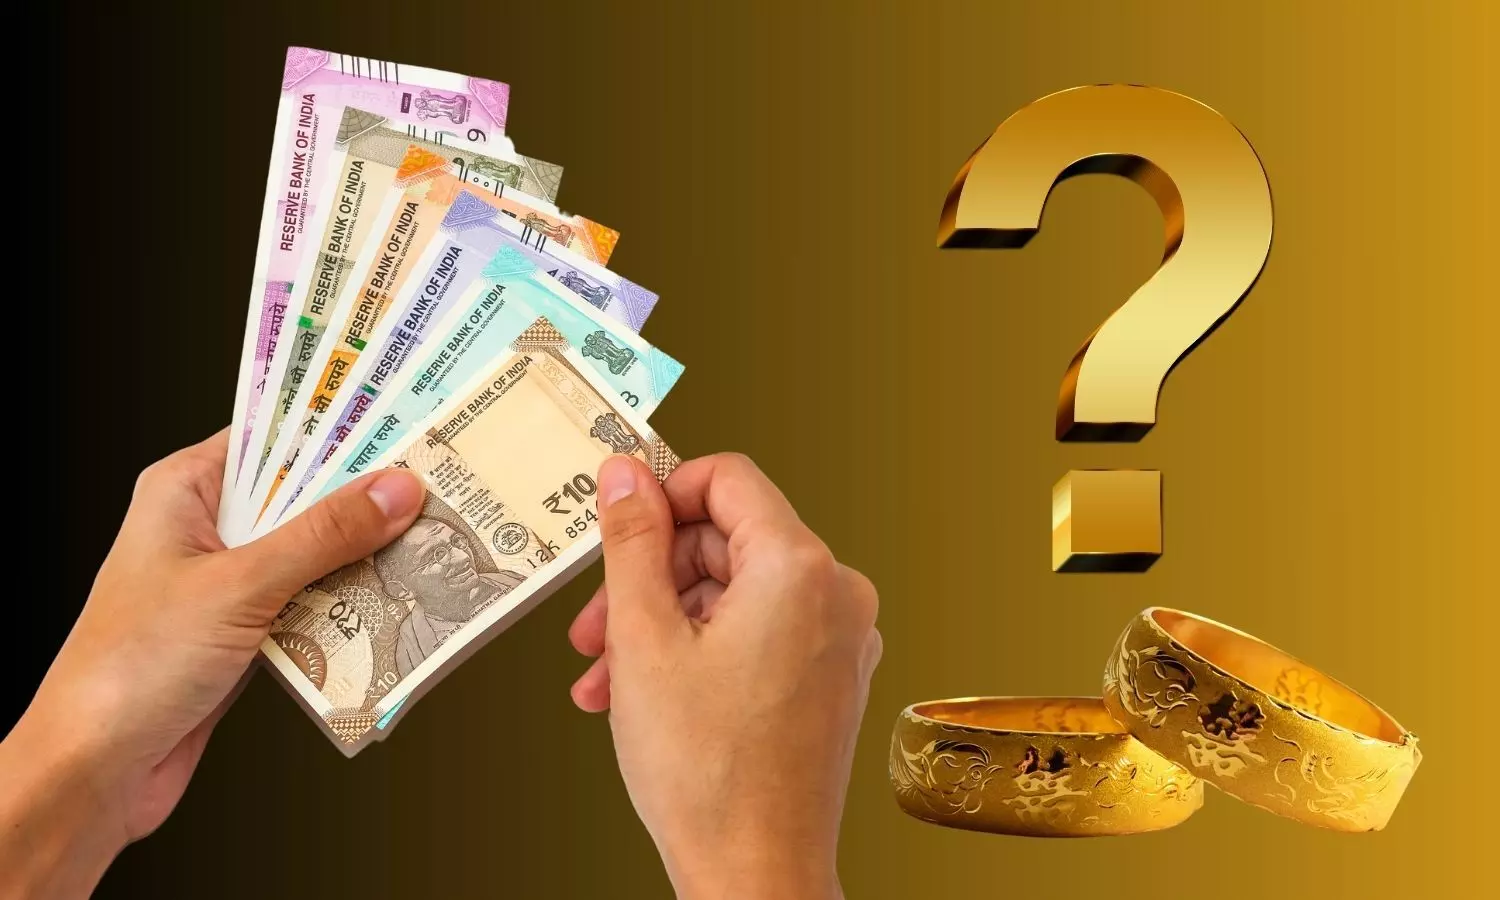 Gold bangles, Indian rupee